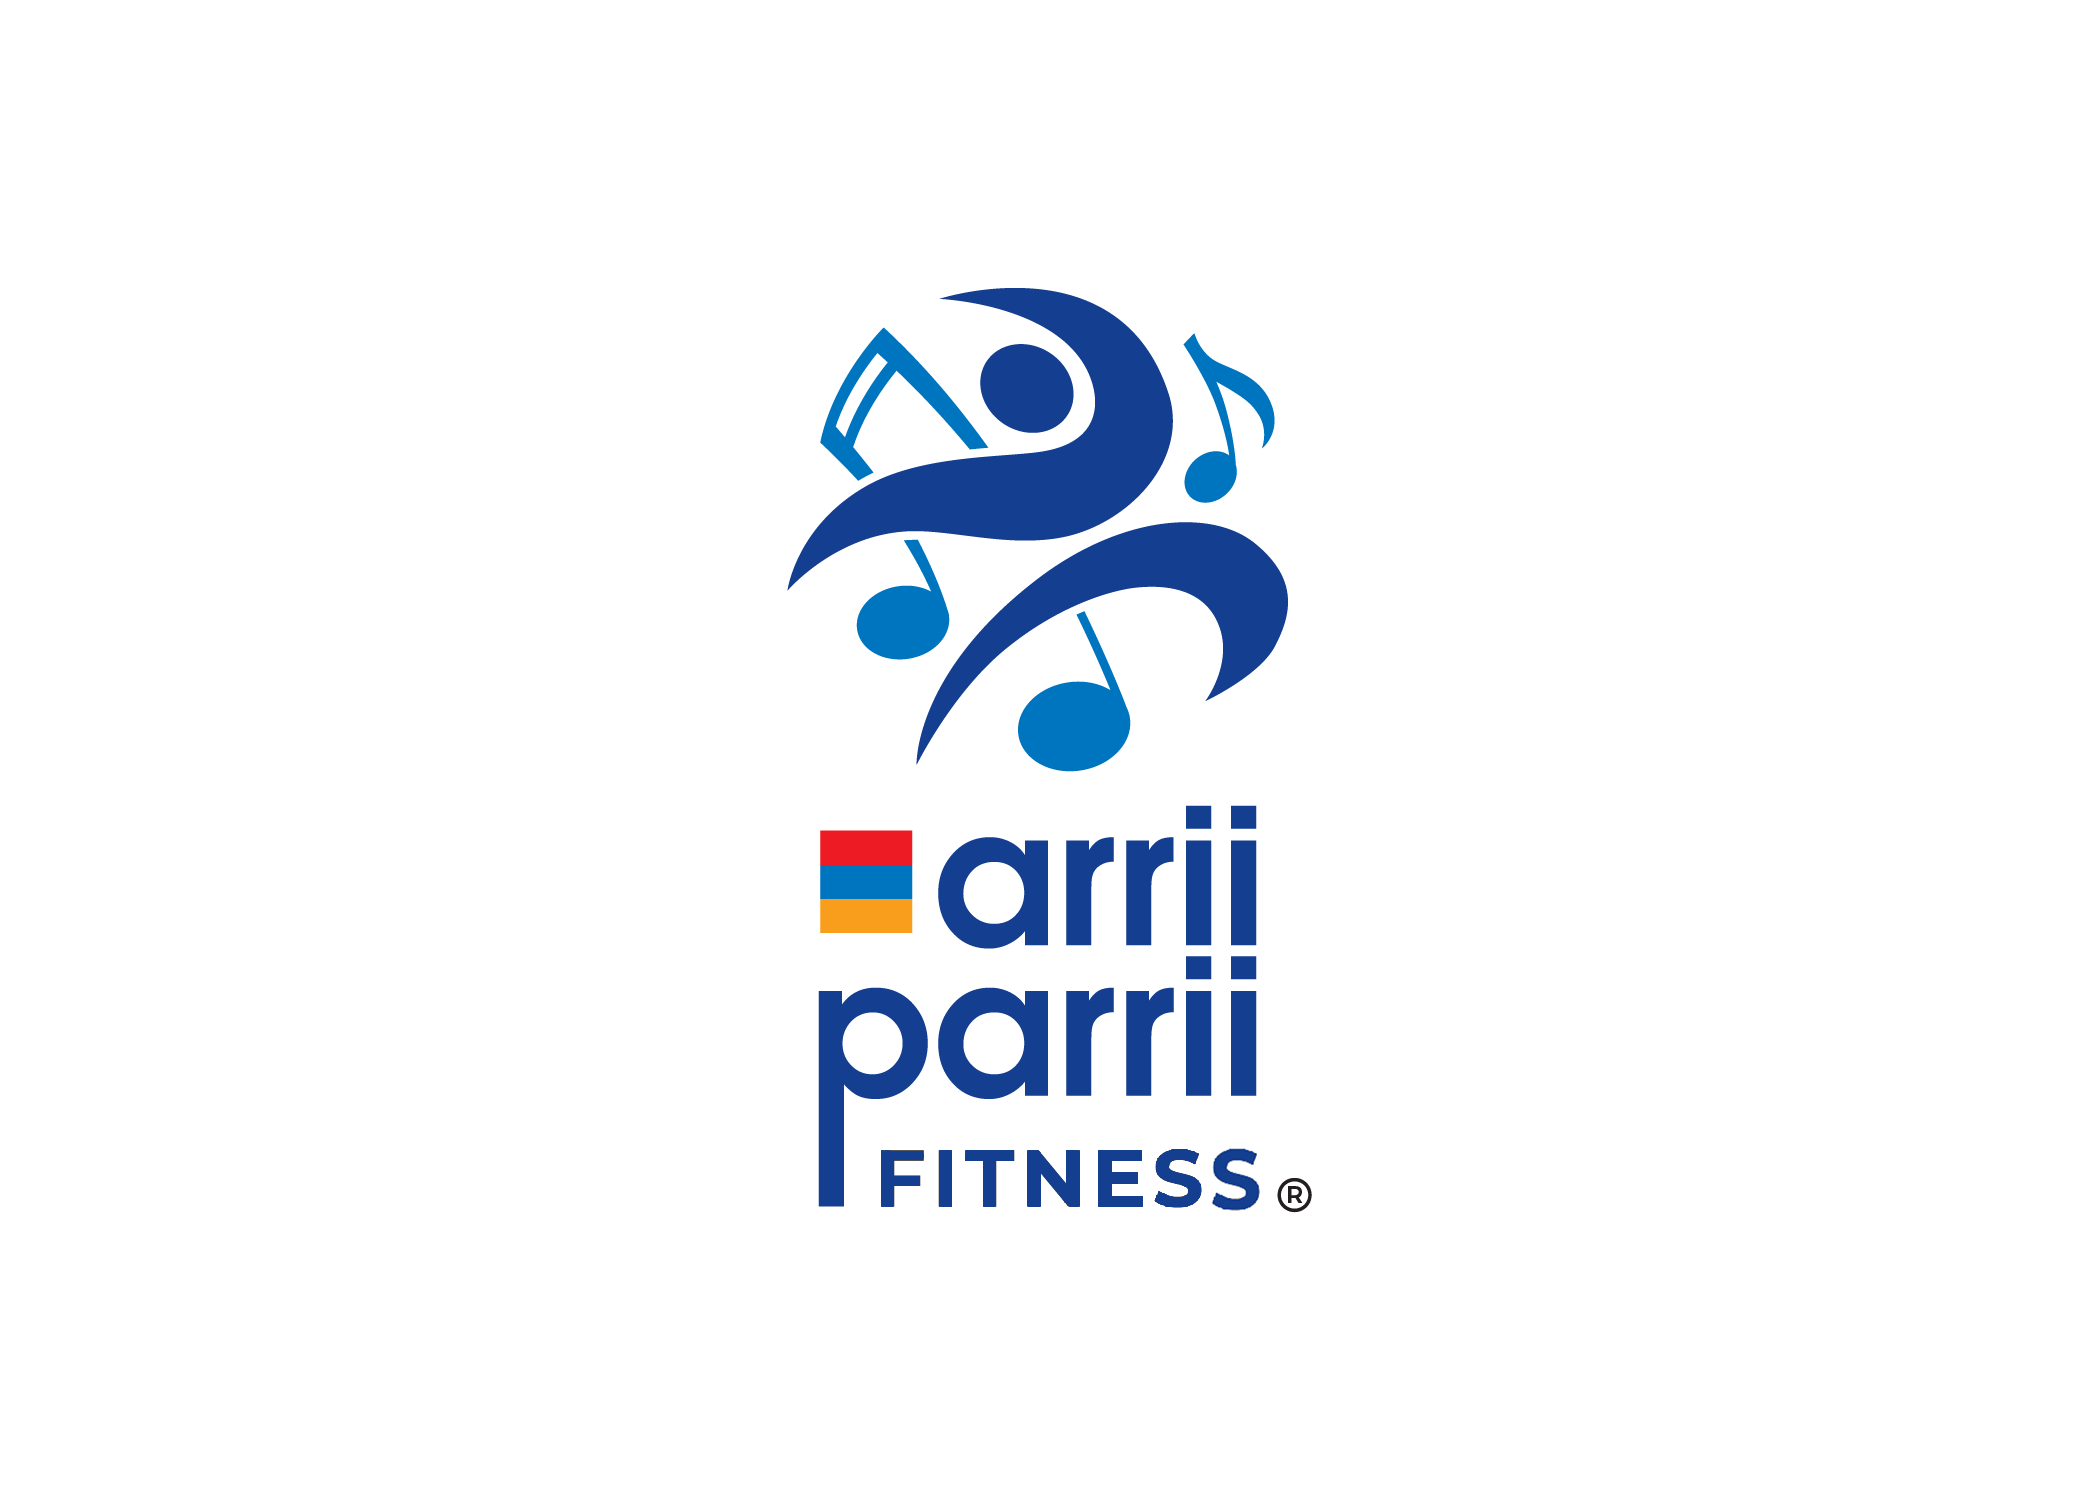 Arrii Parrii Online International Dance Workout • BuyArmenian Marketplace